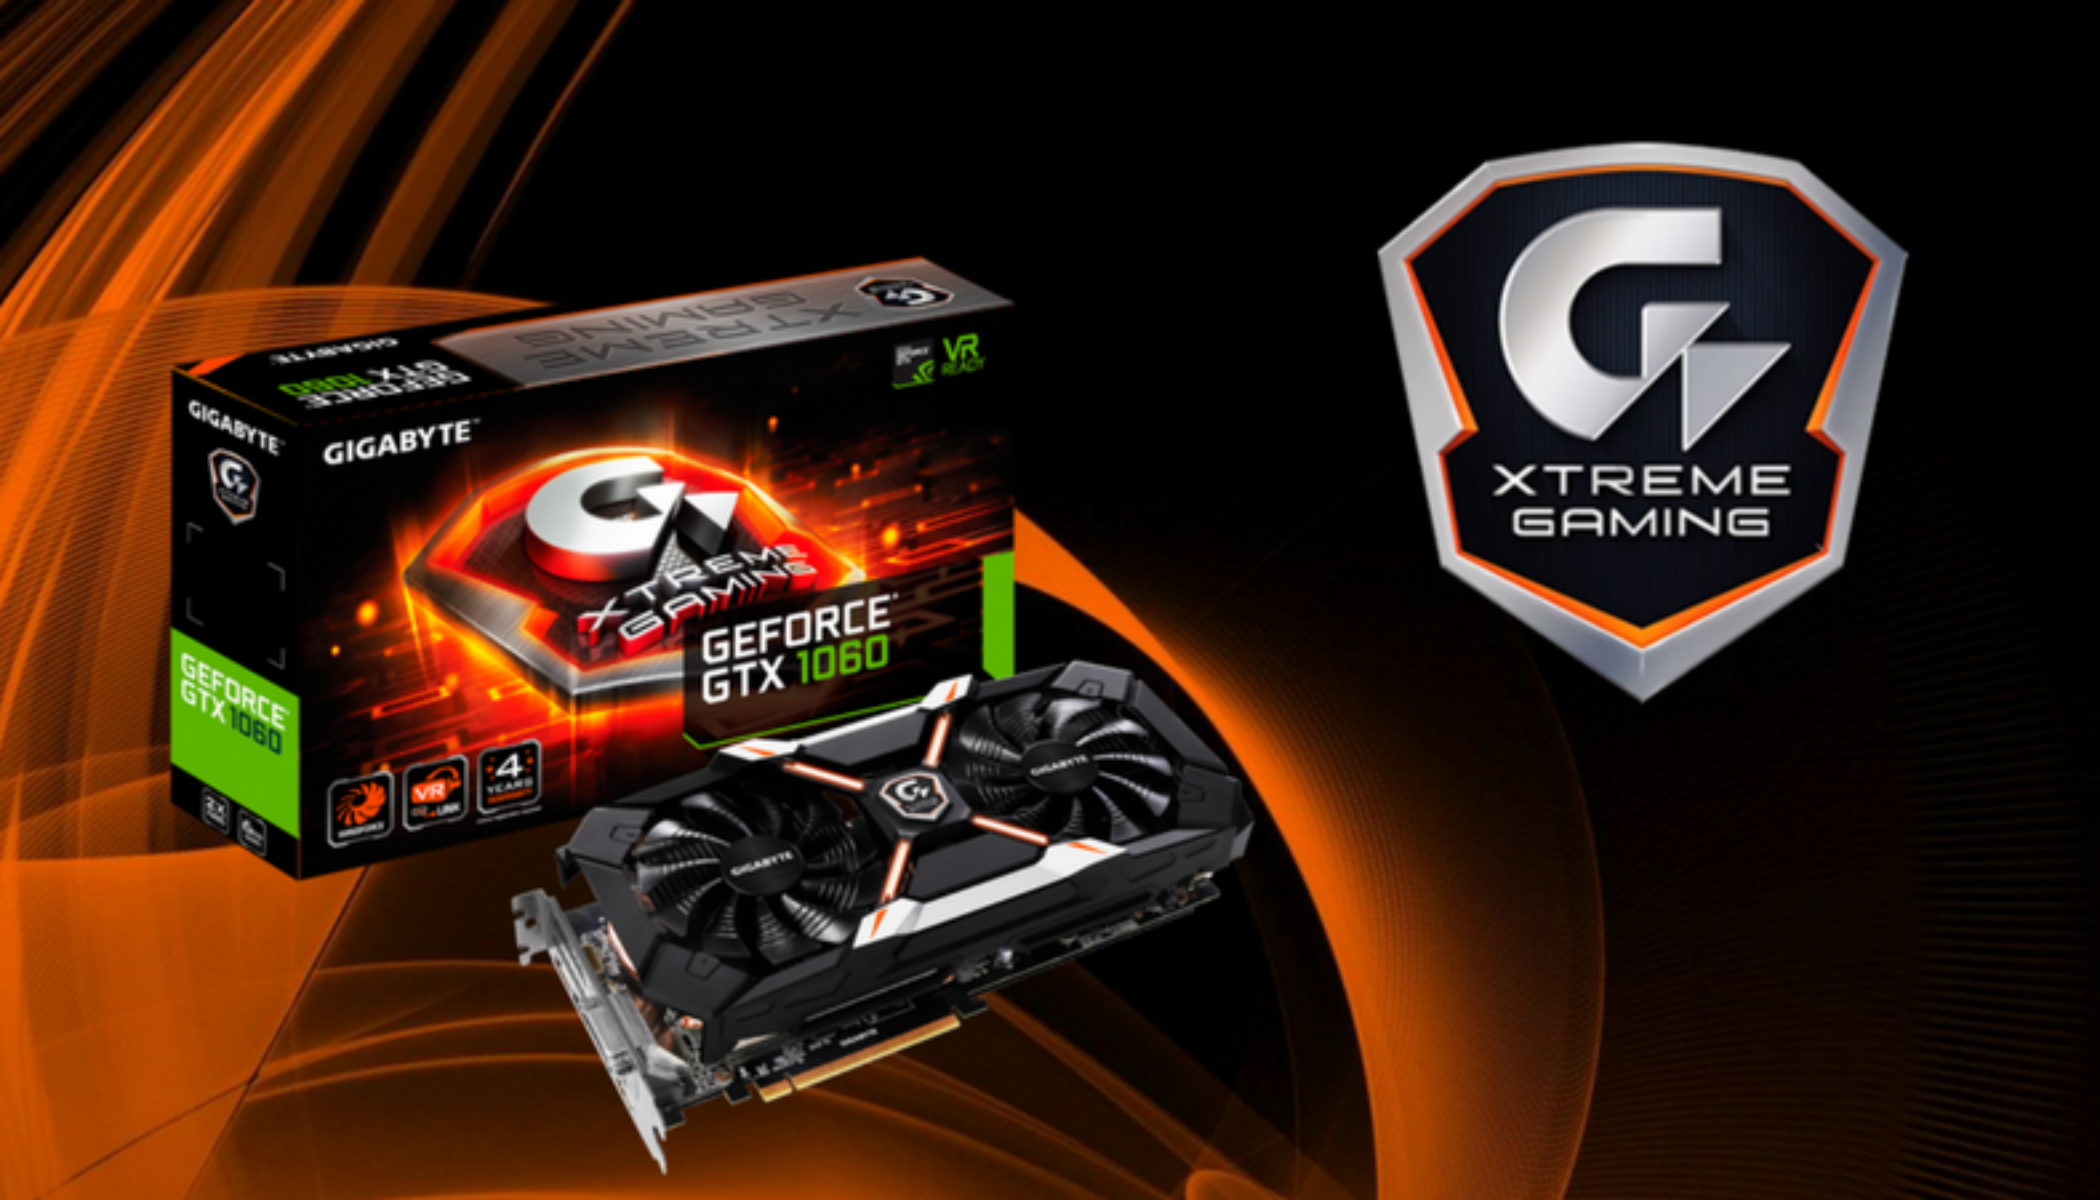 GTX 1060 Xtreme Gaming 6g. Gigabyte GEFORCE GTX 1060 Xtreme Gaming. 1060 6 ГБ Xtreme. GTX 1060 extreme Gaming 6g. Gigabyte gtx 1060 gaming